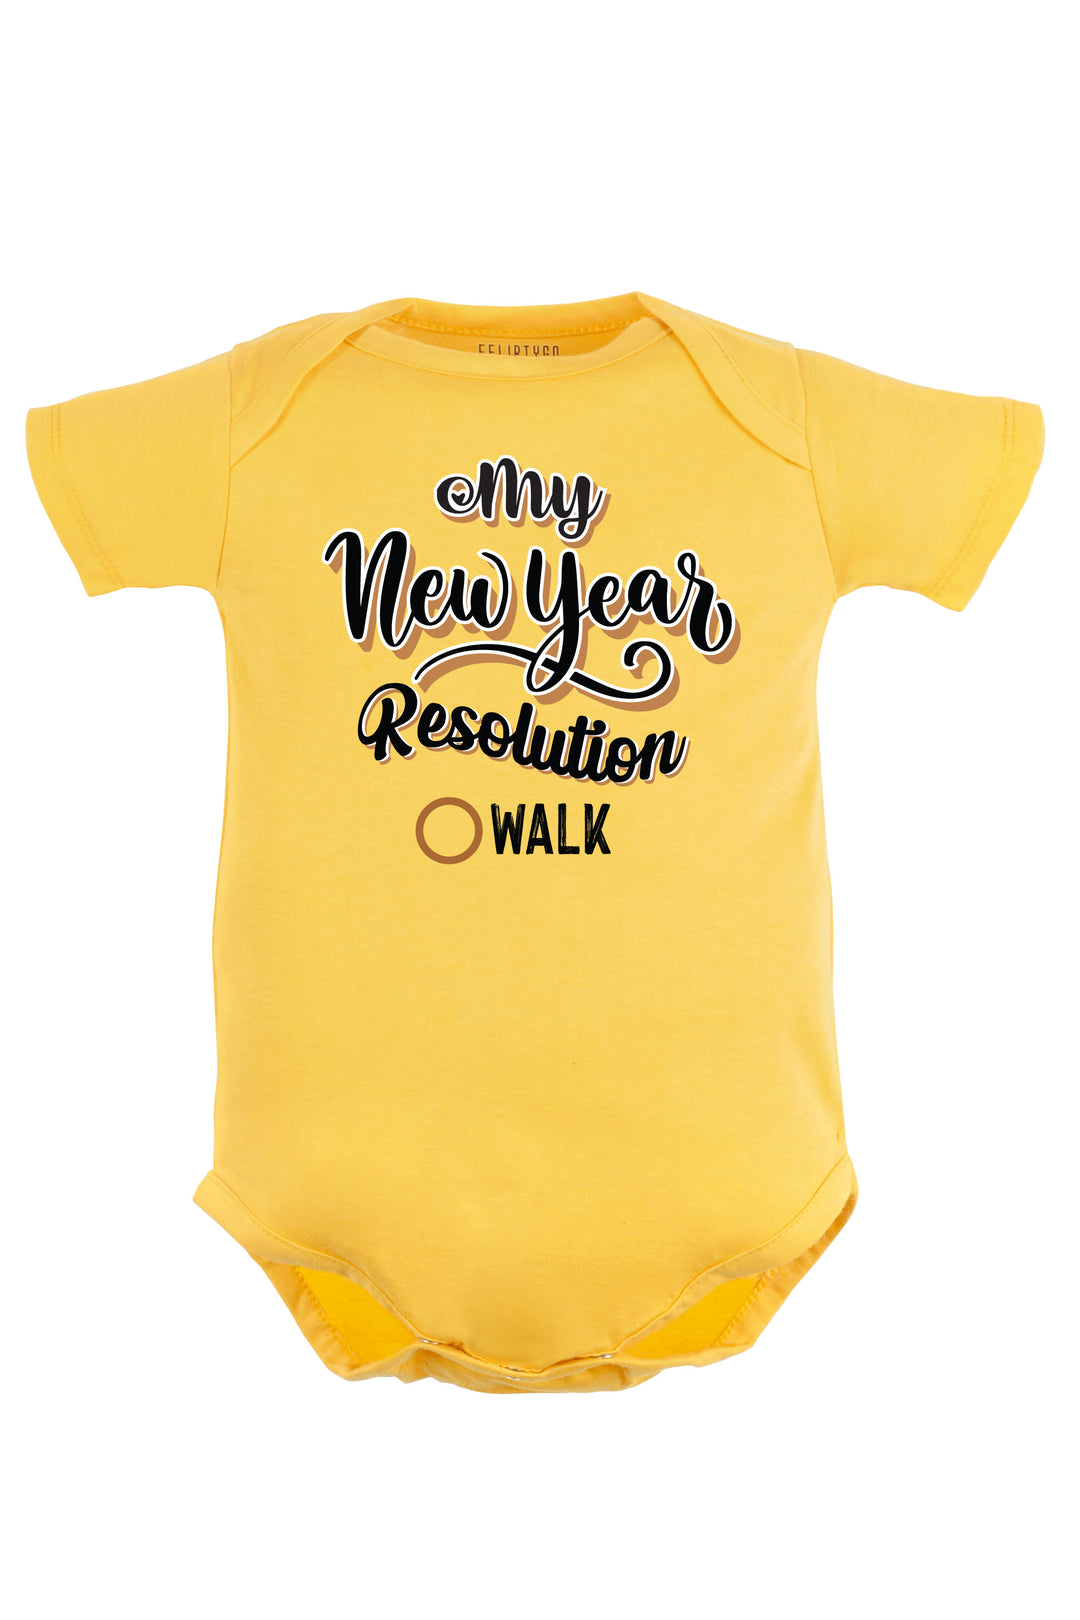 My New Year Resolution Walk Baby Romper | Onesies